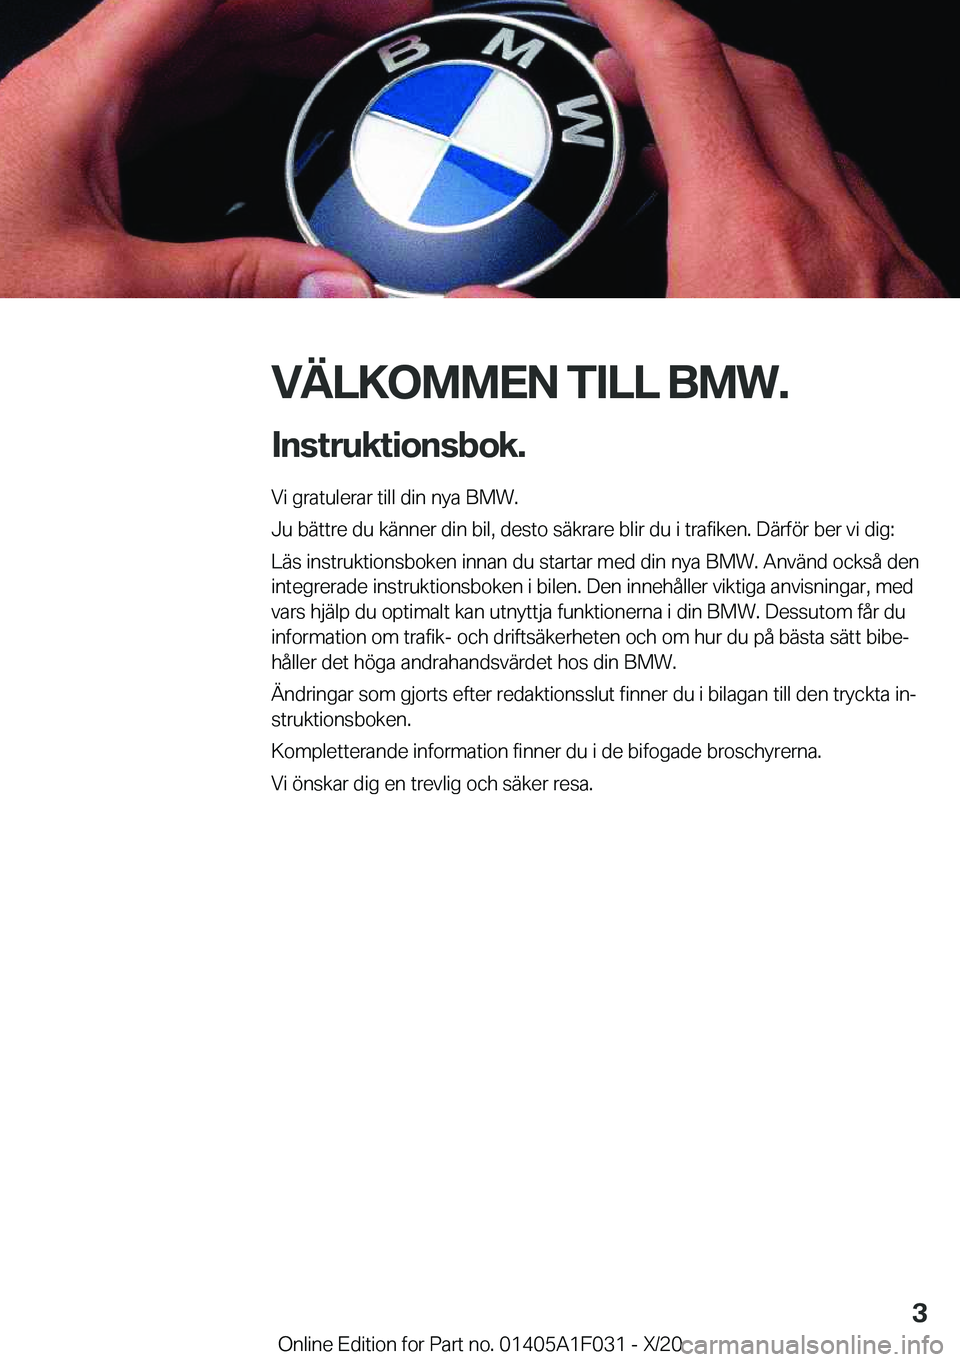 BMW X1 2021  InstruktionsbÖcker (in Swedish) �V�Ä�L�K�O�M�M�E�N��T�I�L�L��B�M�W�.�I�n�s�t�r�u�k�t�i�o�n�s�b�o�k�.
�V�i��g�r�a�t�u�l�e�r�a�r��t�i�l�l��d�i�n��n�y�a��B�M�W�.
�J�u��b�ä�t�t�r�e��d�u��k�ä�n�n�e�r��d�i�n��b�i�l�,��d�e�